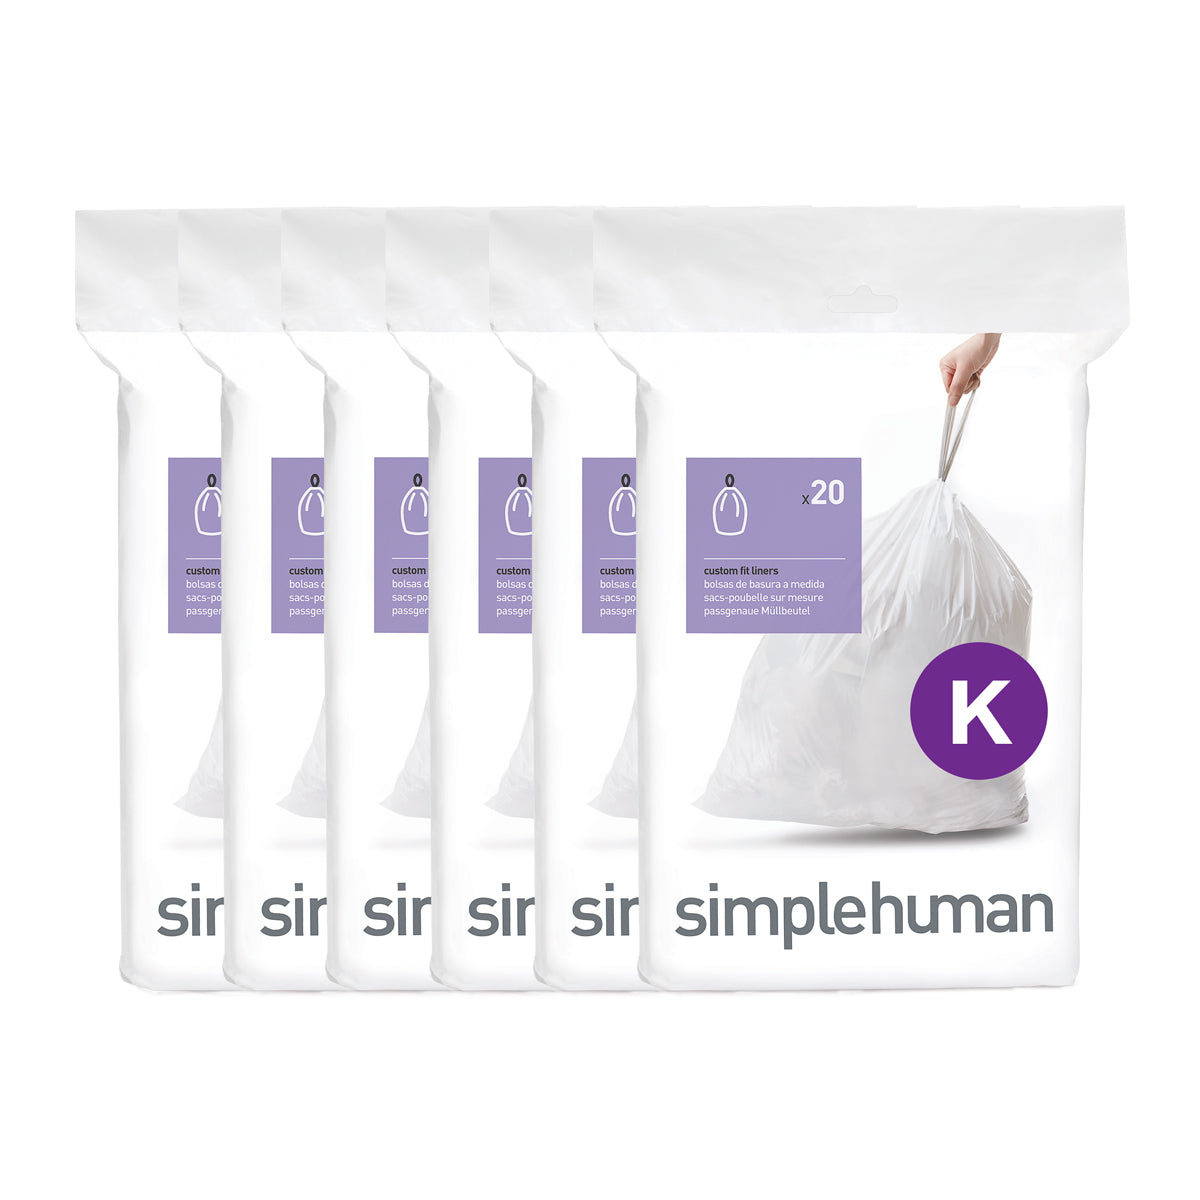 Simplehuman Custom Fit K Liner, 60pk, Trash Cans & Recycling Bins